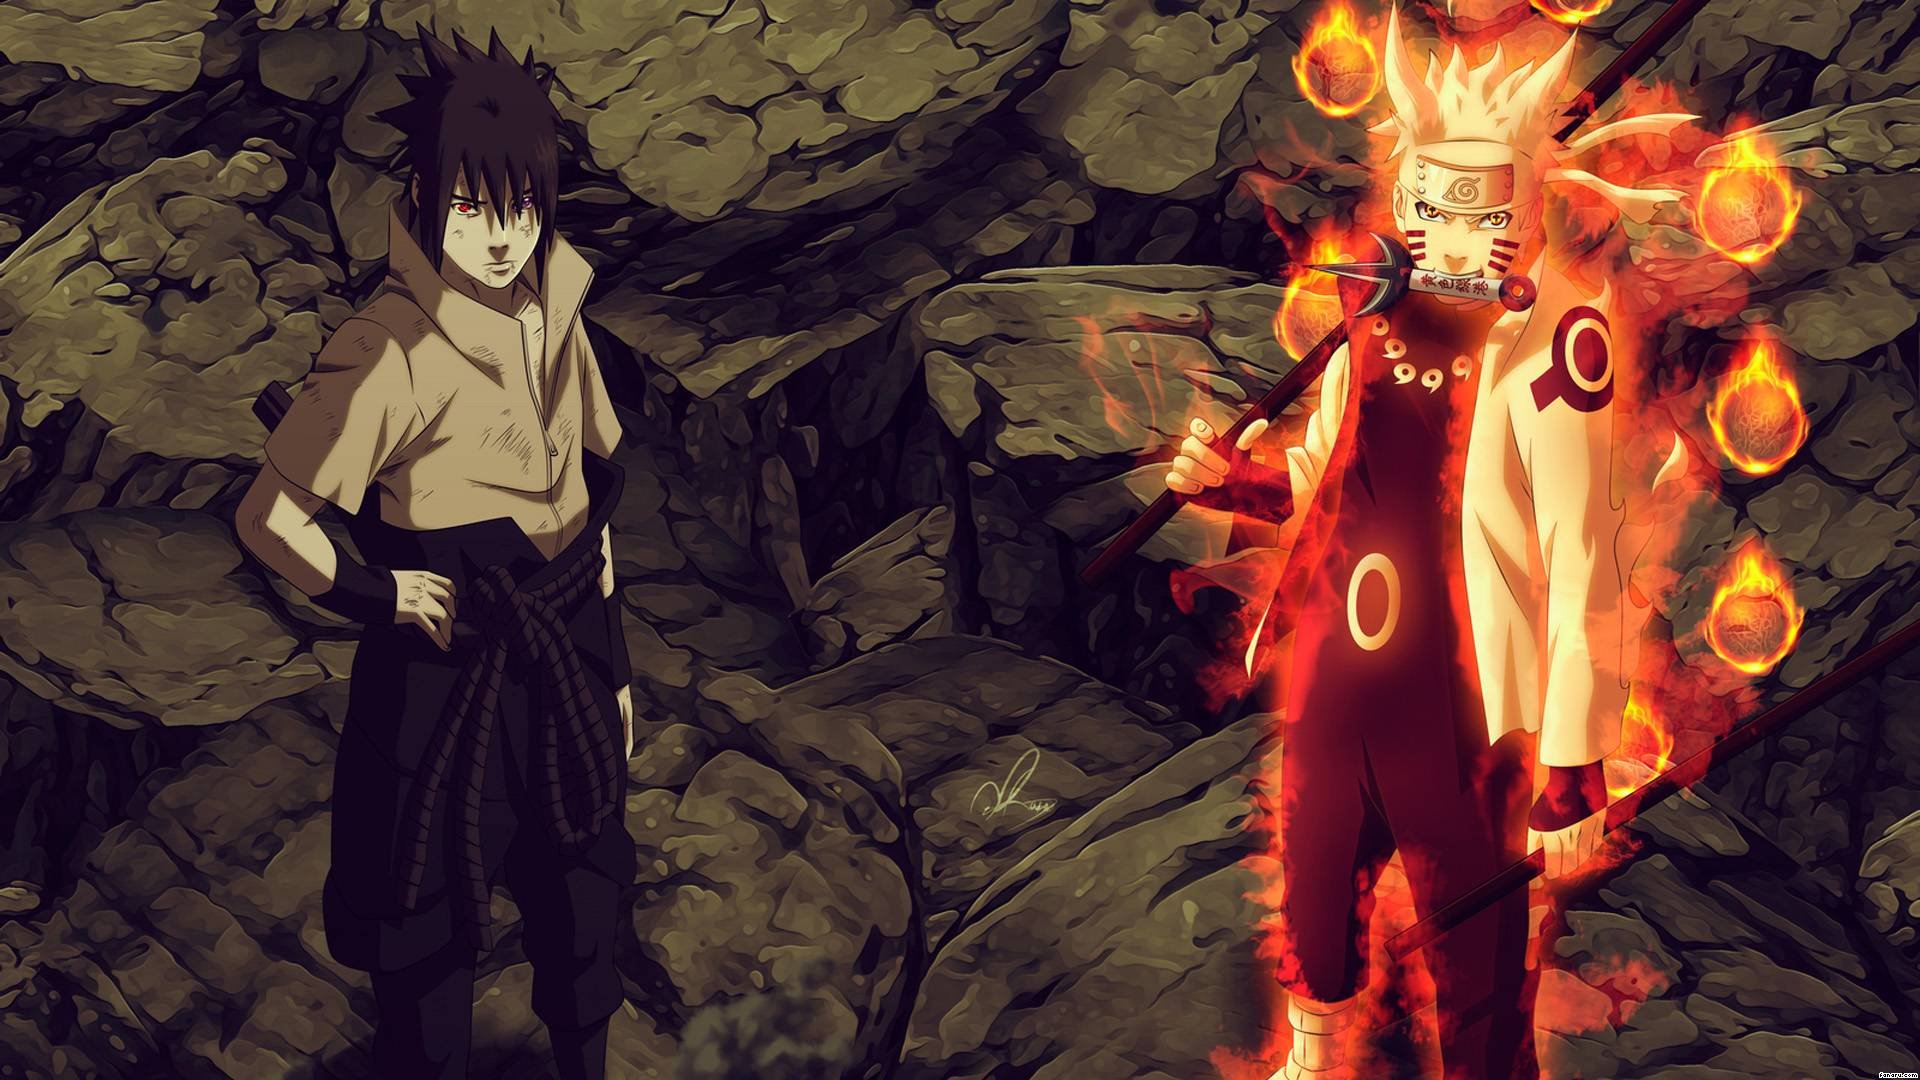 Cool Naruto Backgrounds  Naruto and sasuke wallpaper, Best naruto